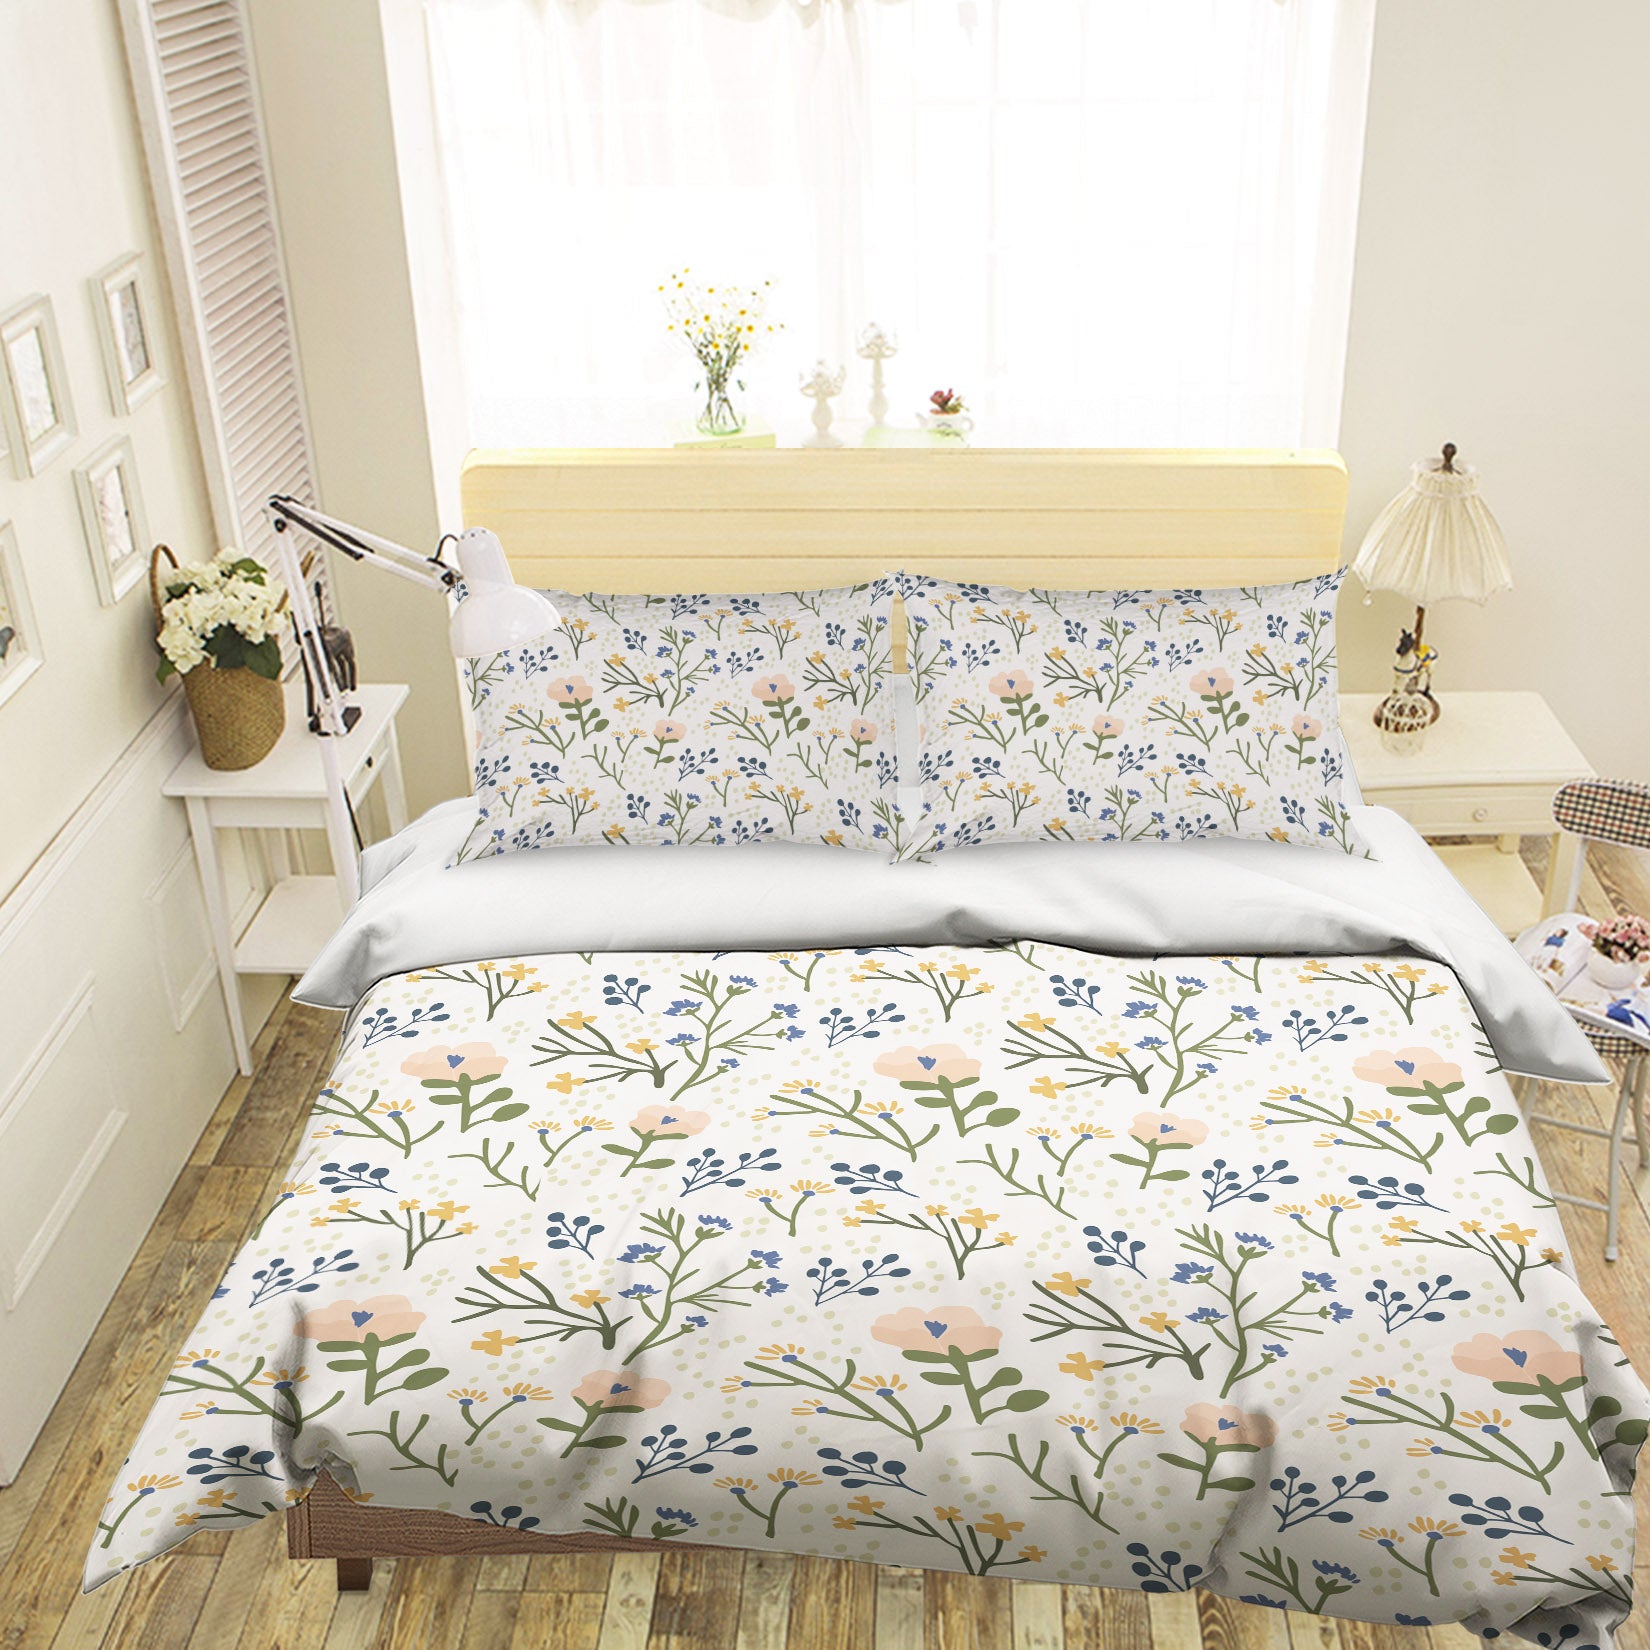 3D Colored Flowers 2109 Jillian Helvey Bedding Bed Pillowcases Quilt